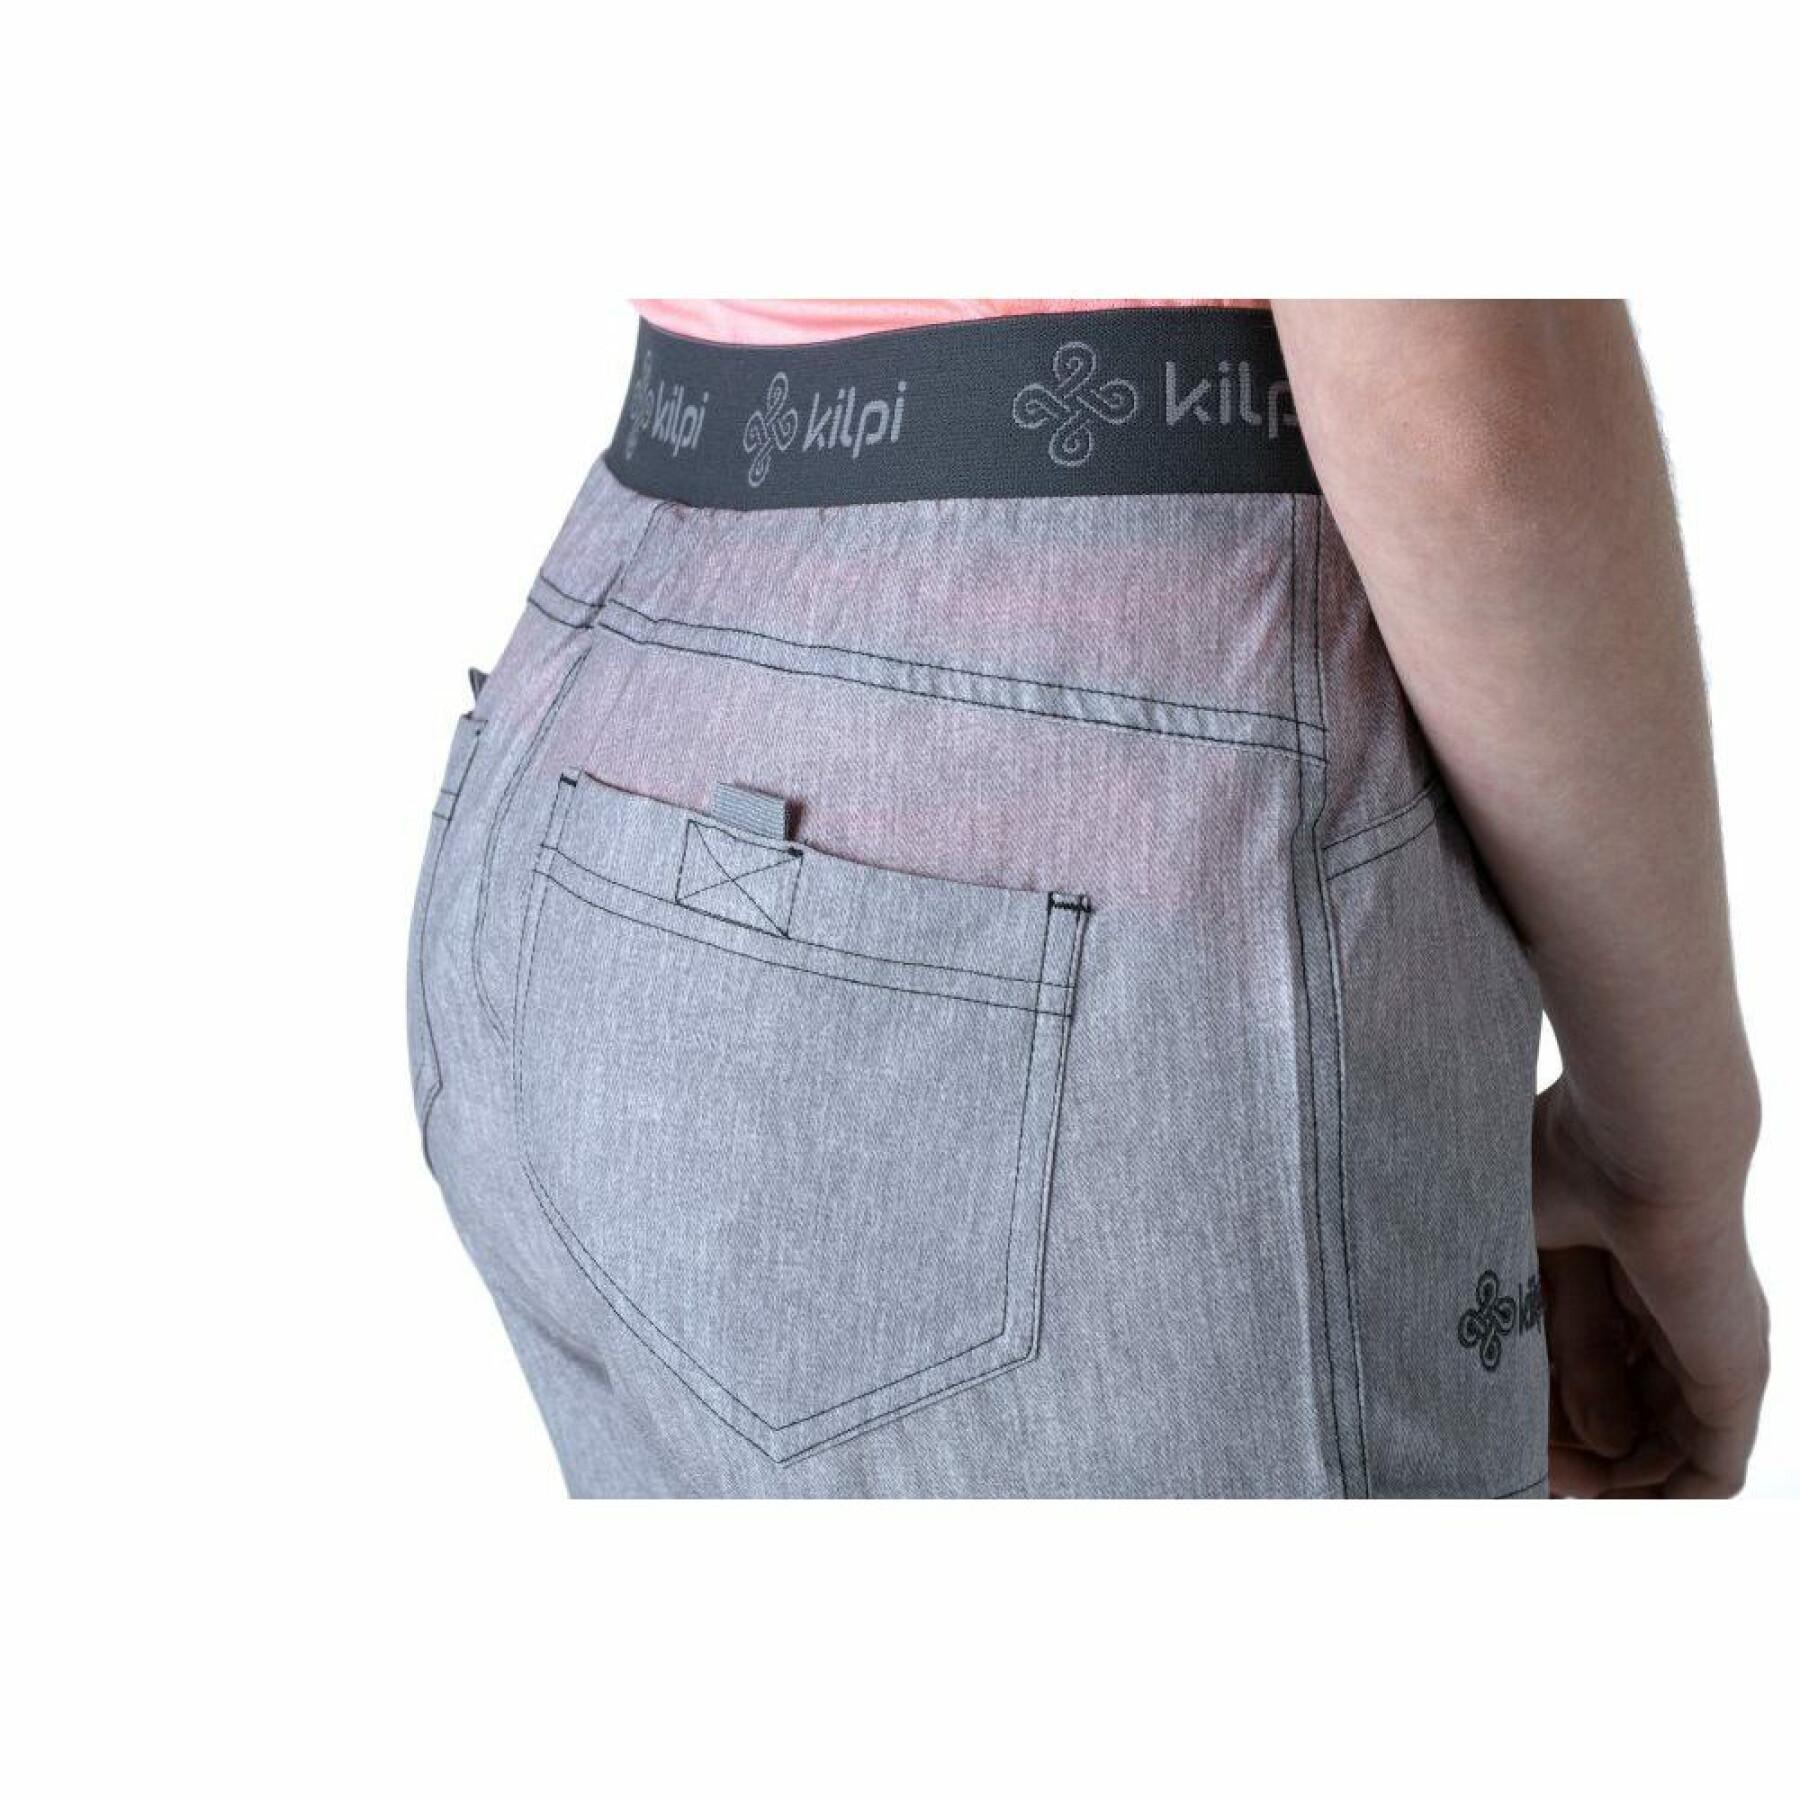 Women's pants Kilpi Mimicri